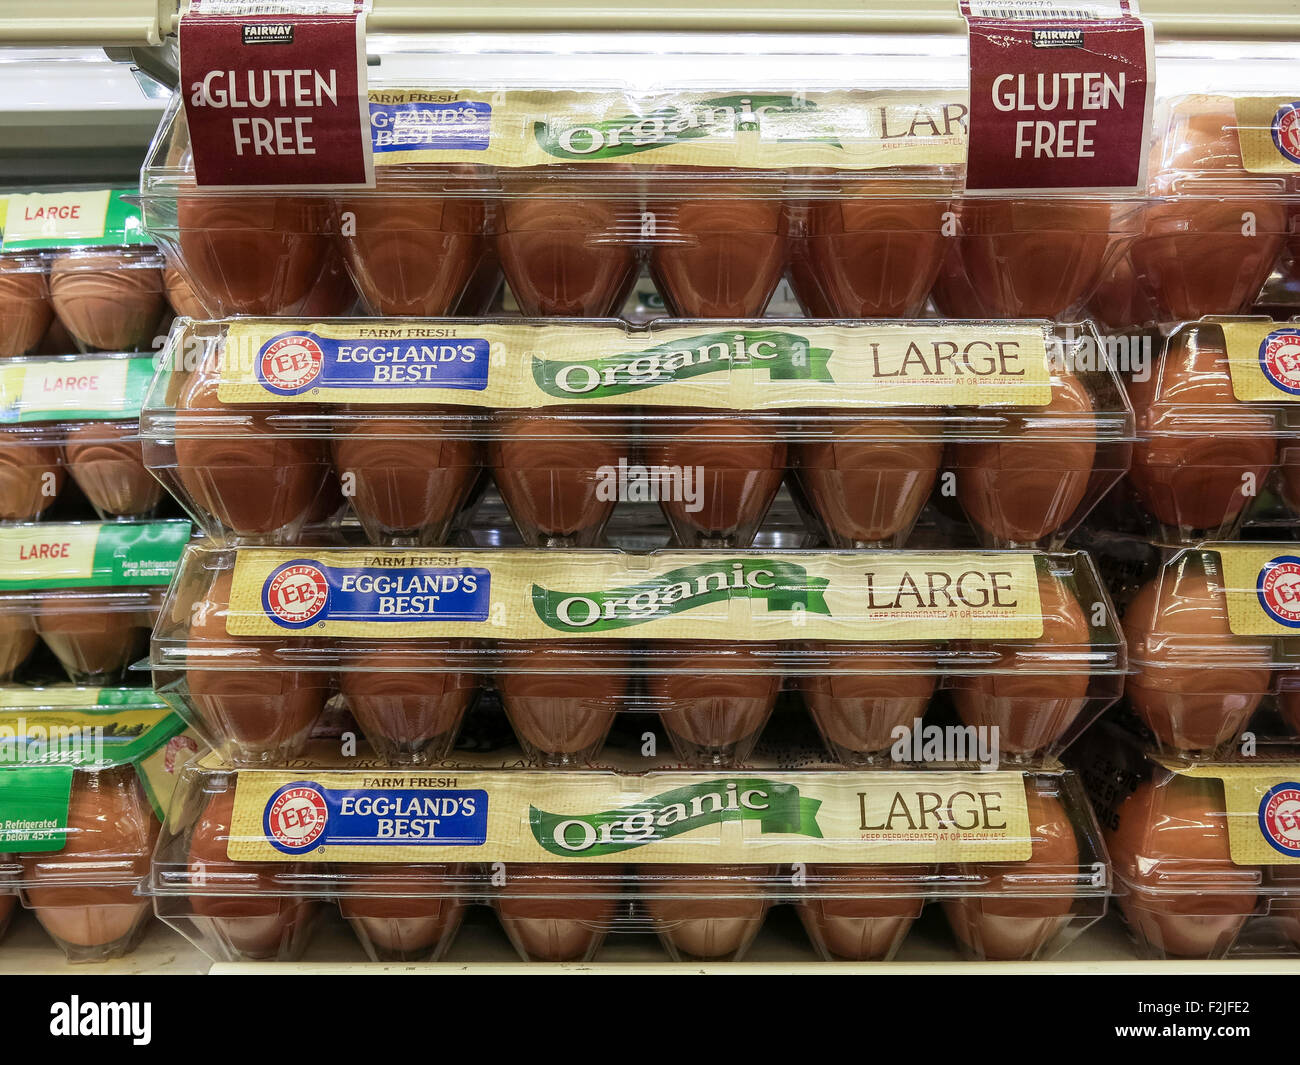 Egg-Land's Best Organic Egg, Fairway Super Market, New York City, USA Banque D'Images